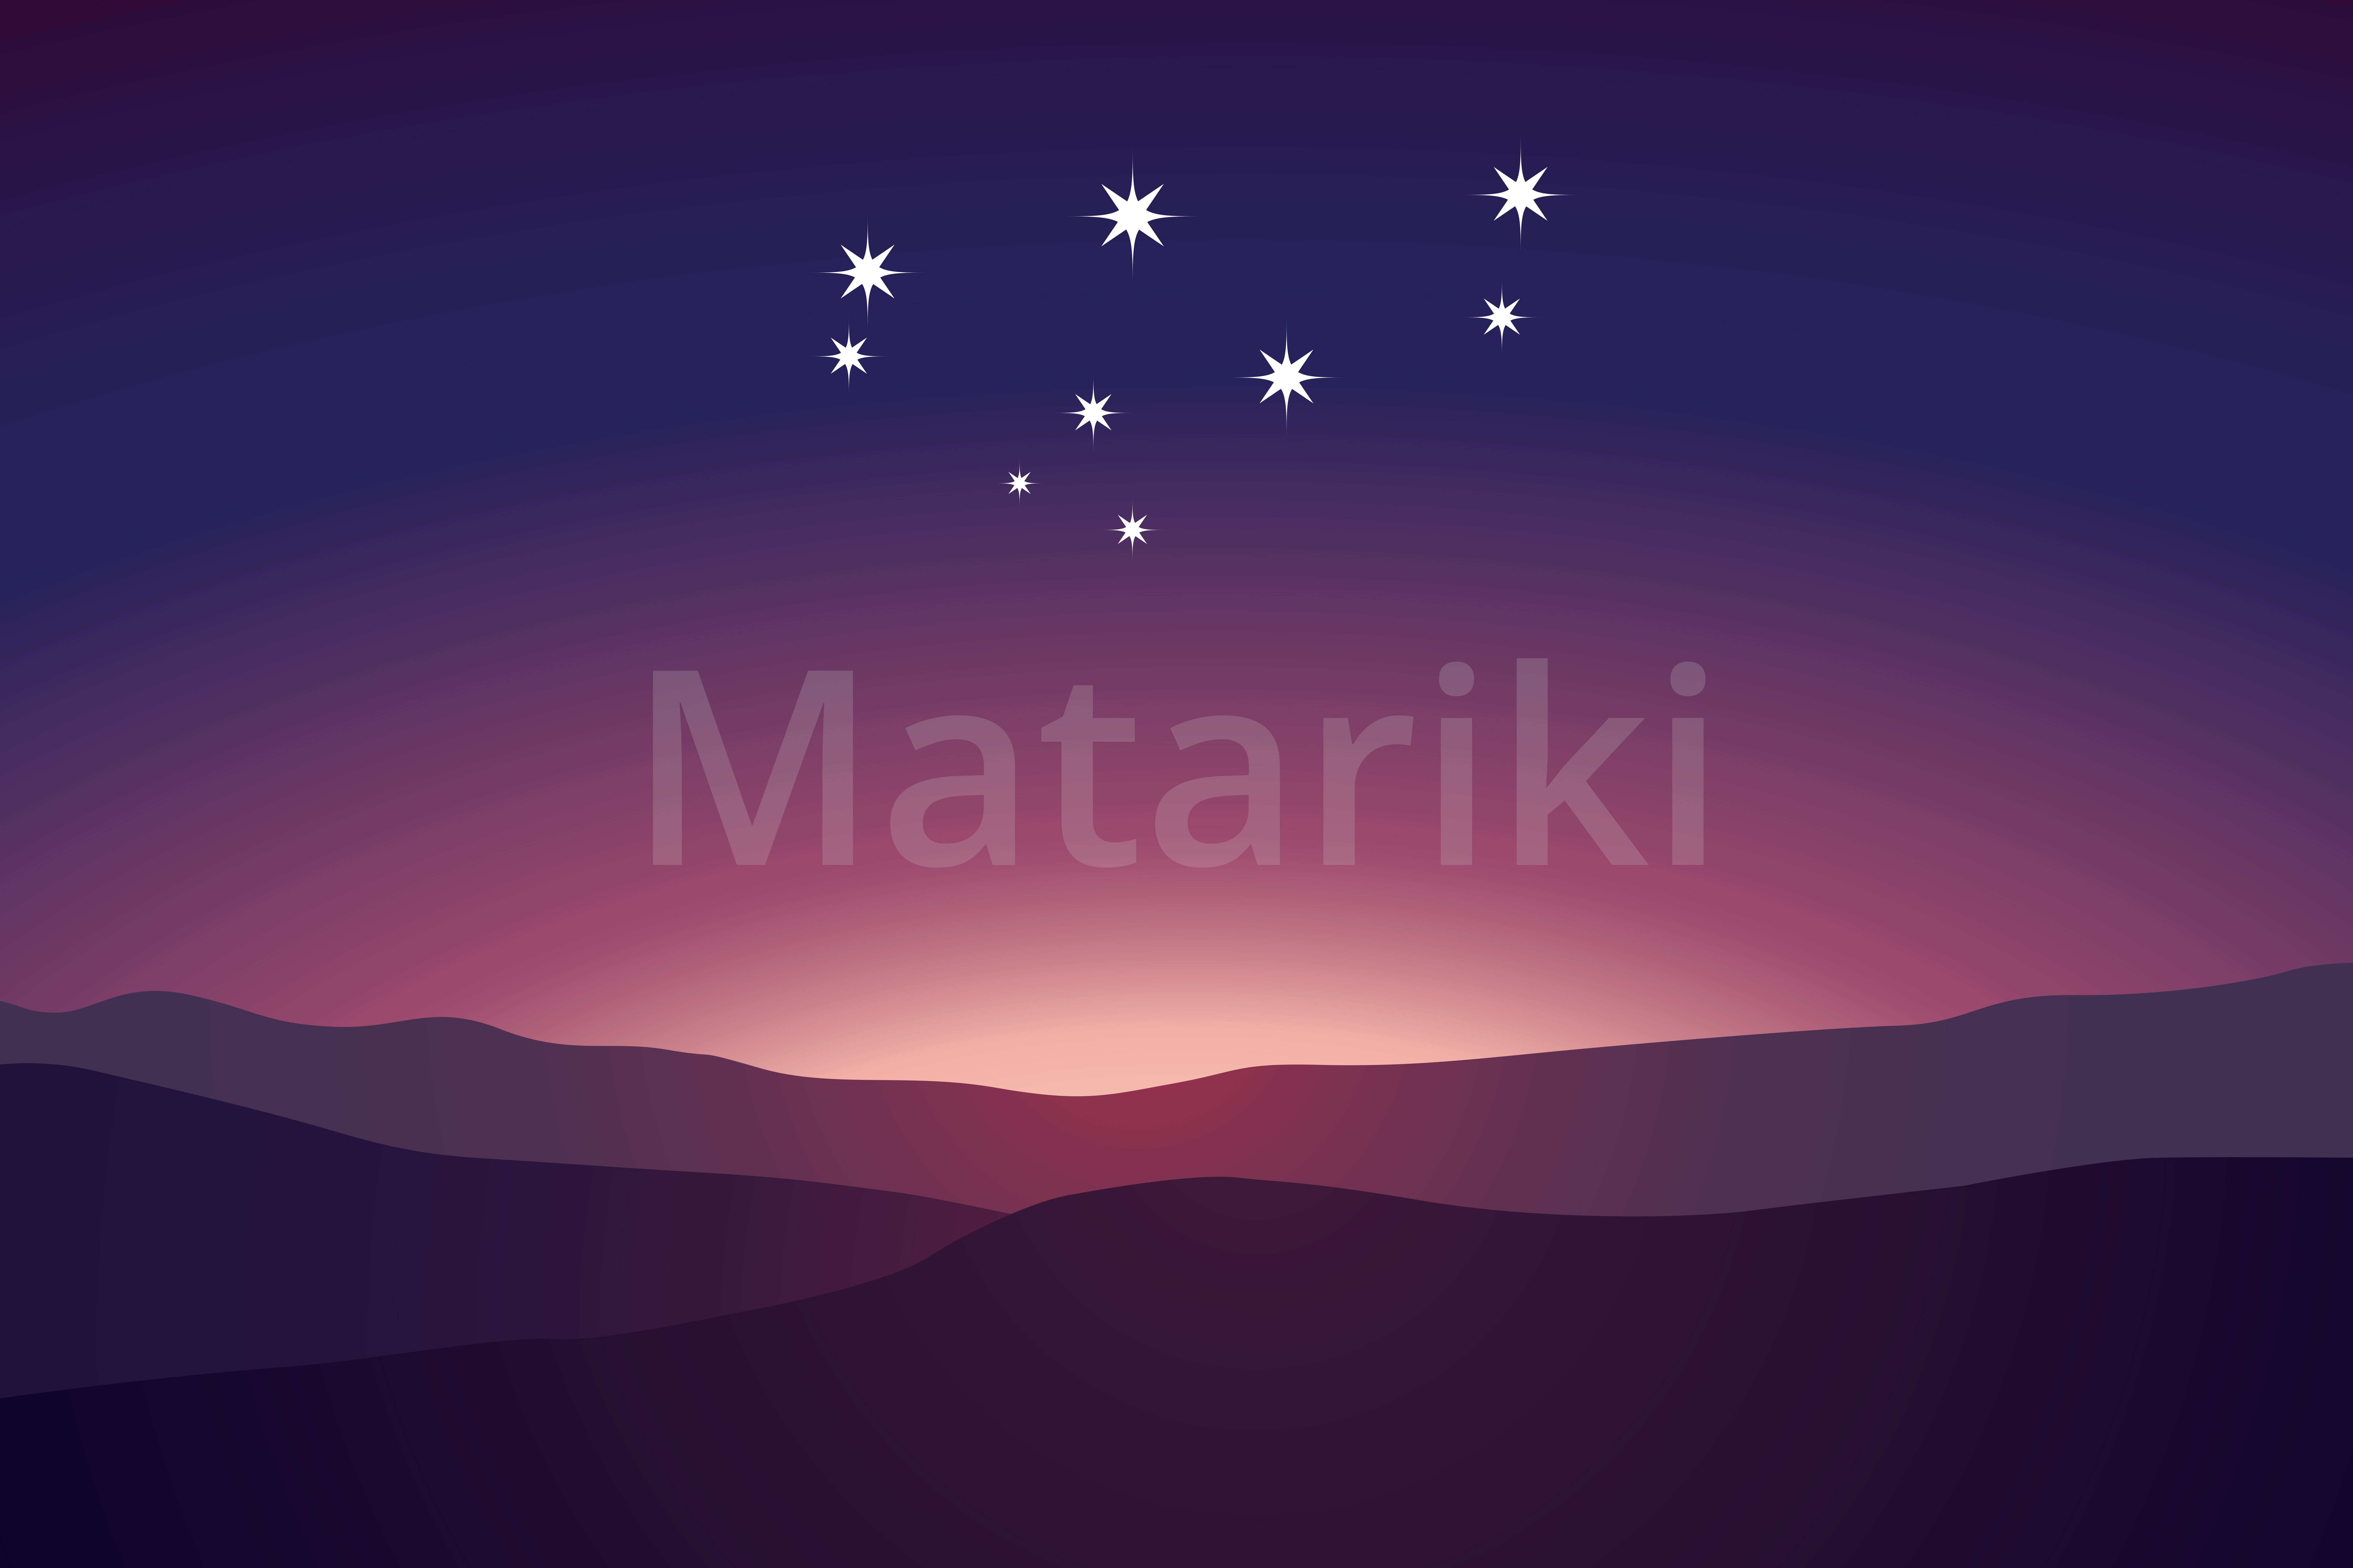 Matariki and helping ākonga thrive in today’s digital world